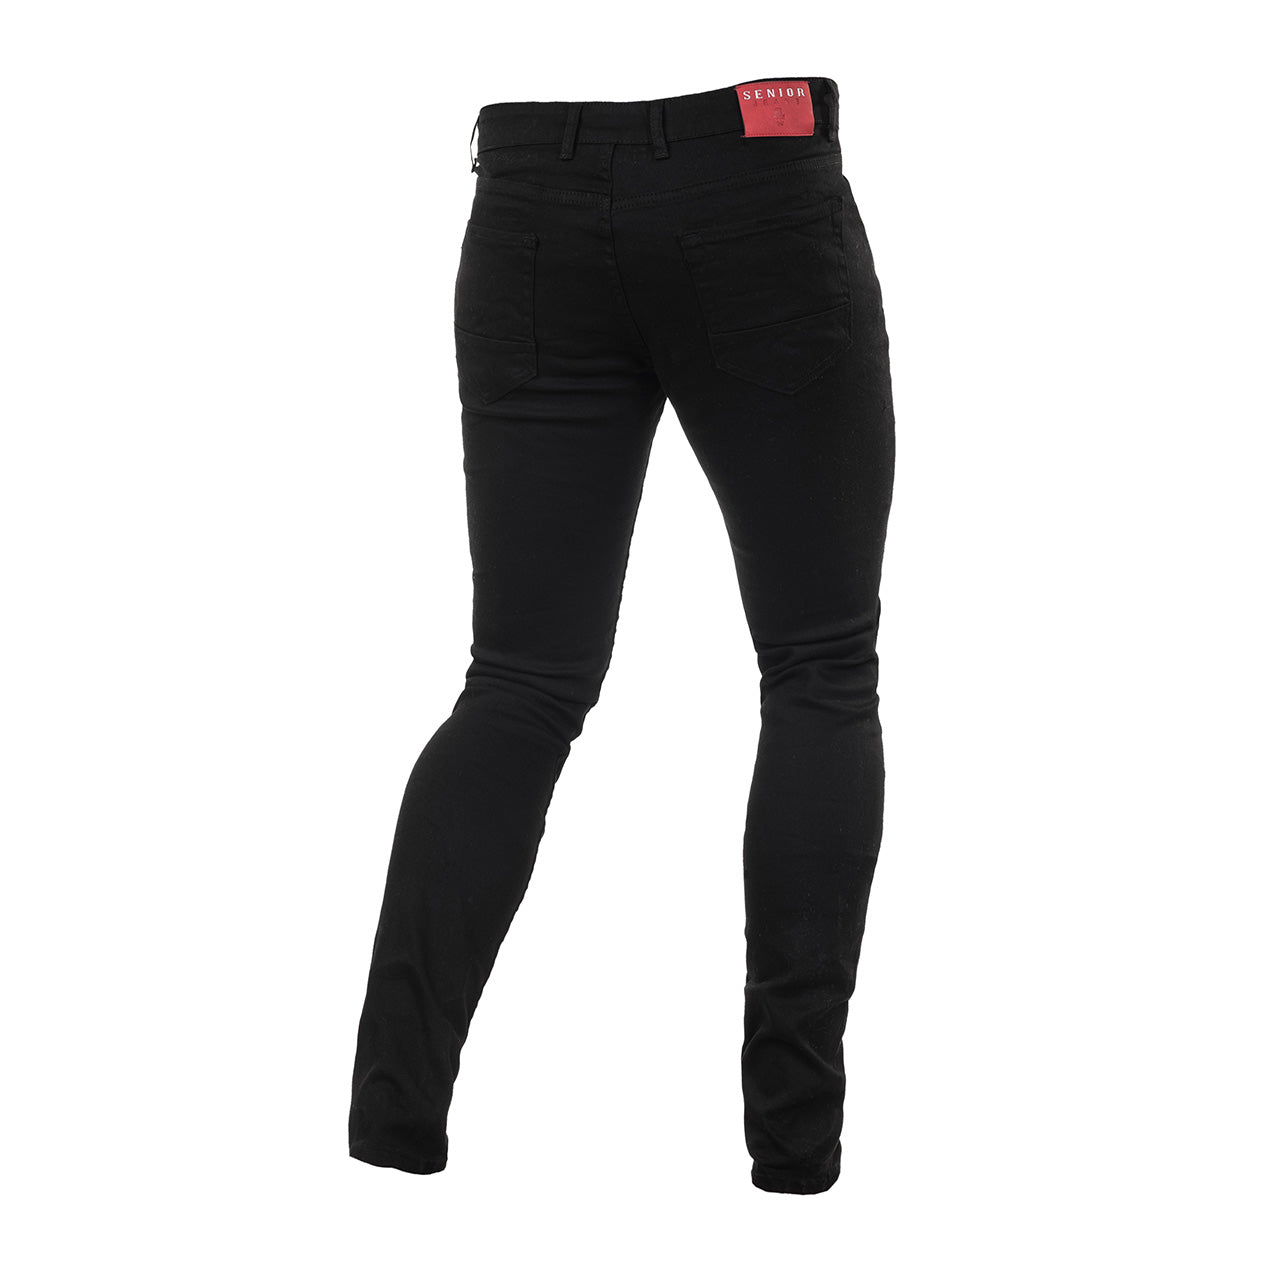 Jeans Μαύρο με Σκισίματα στα Γόνατα (115) - Panda Clothing